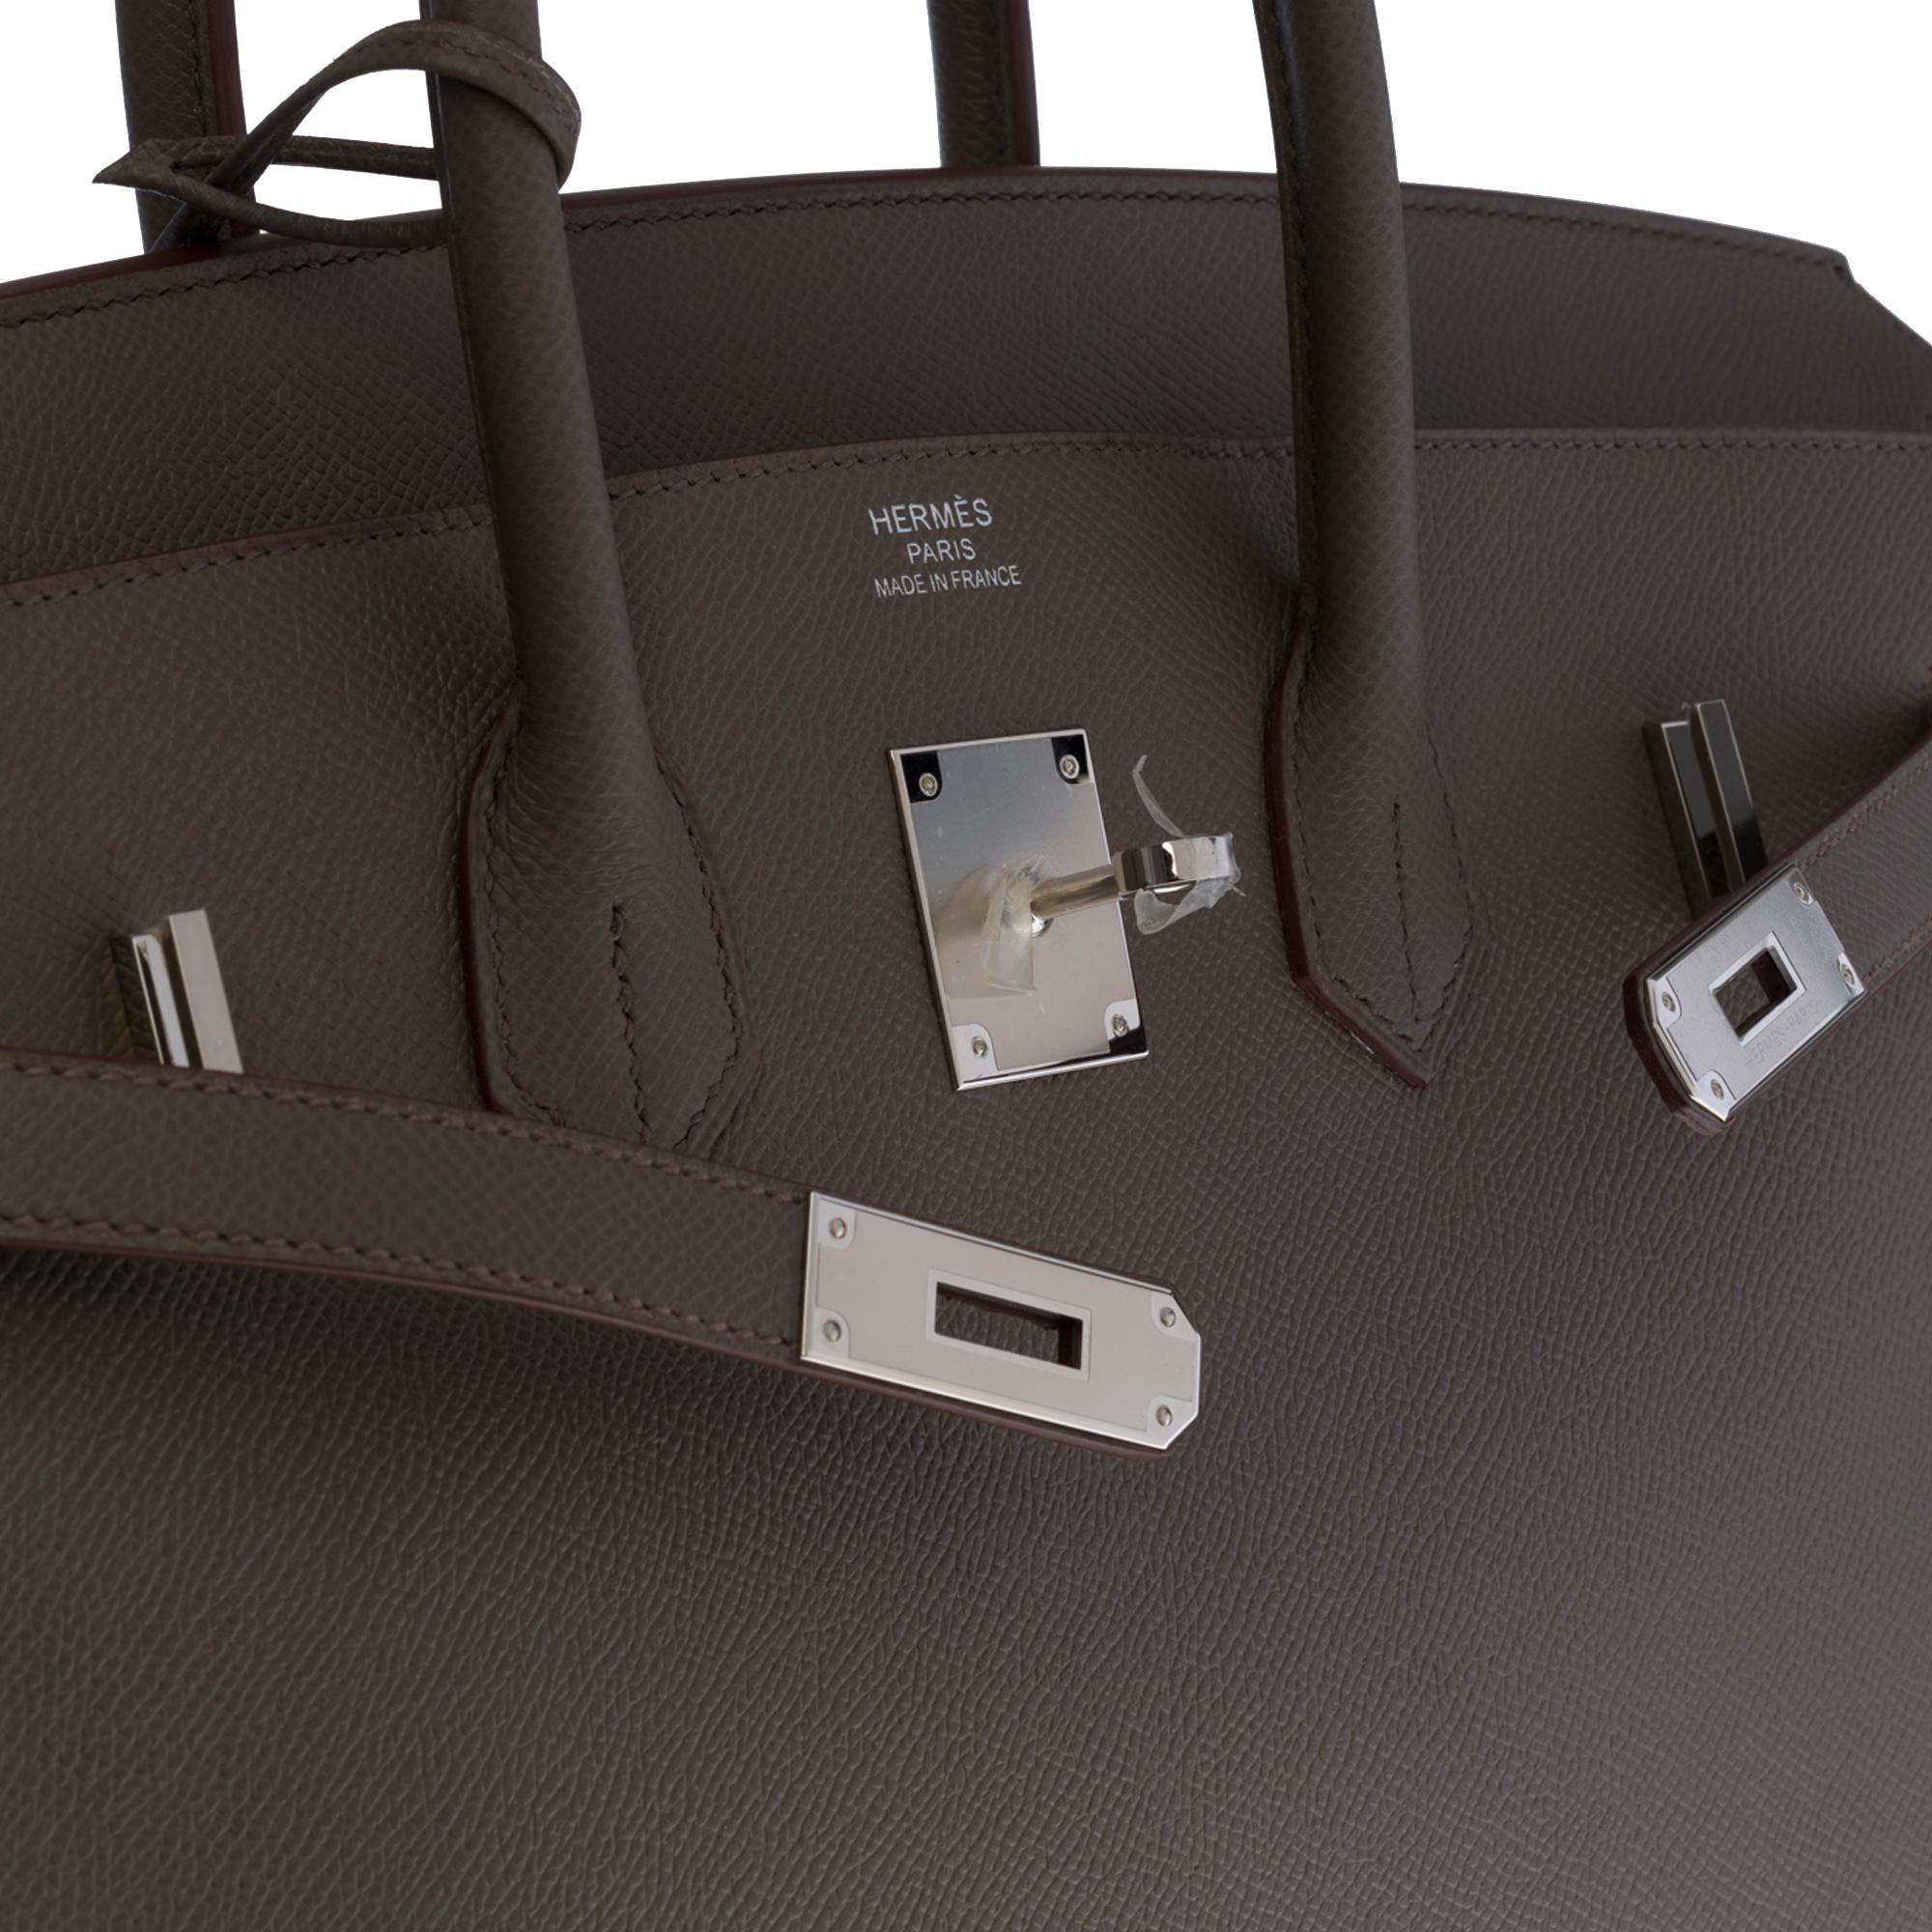 Black Brand New -Full set-Hermès Birkin 35 handbag in Etain Epsom leather, SHW